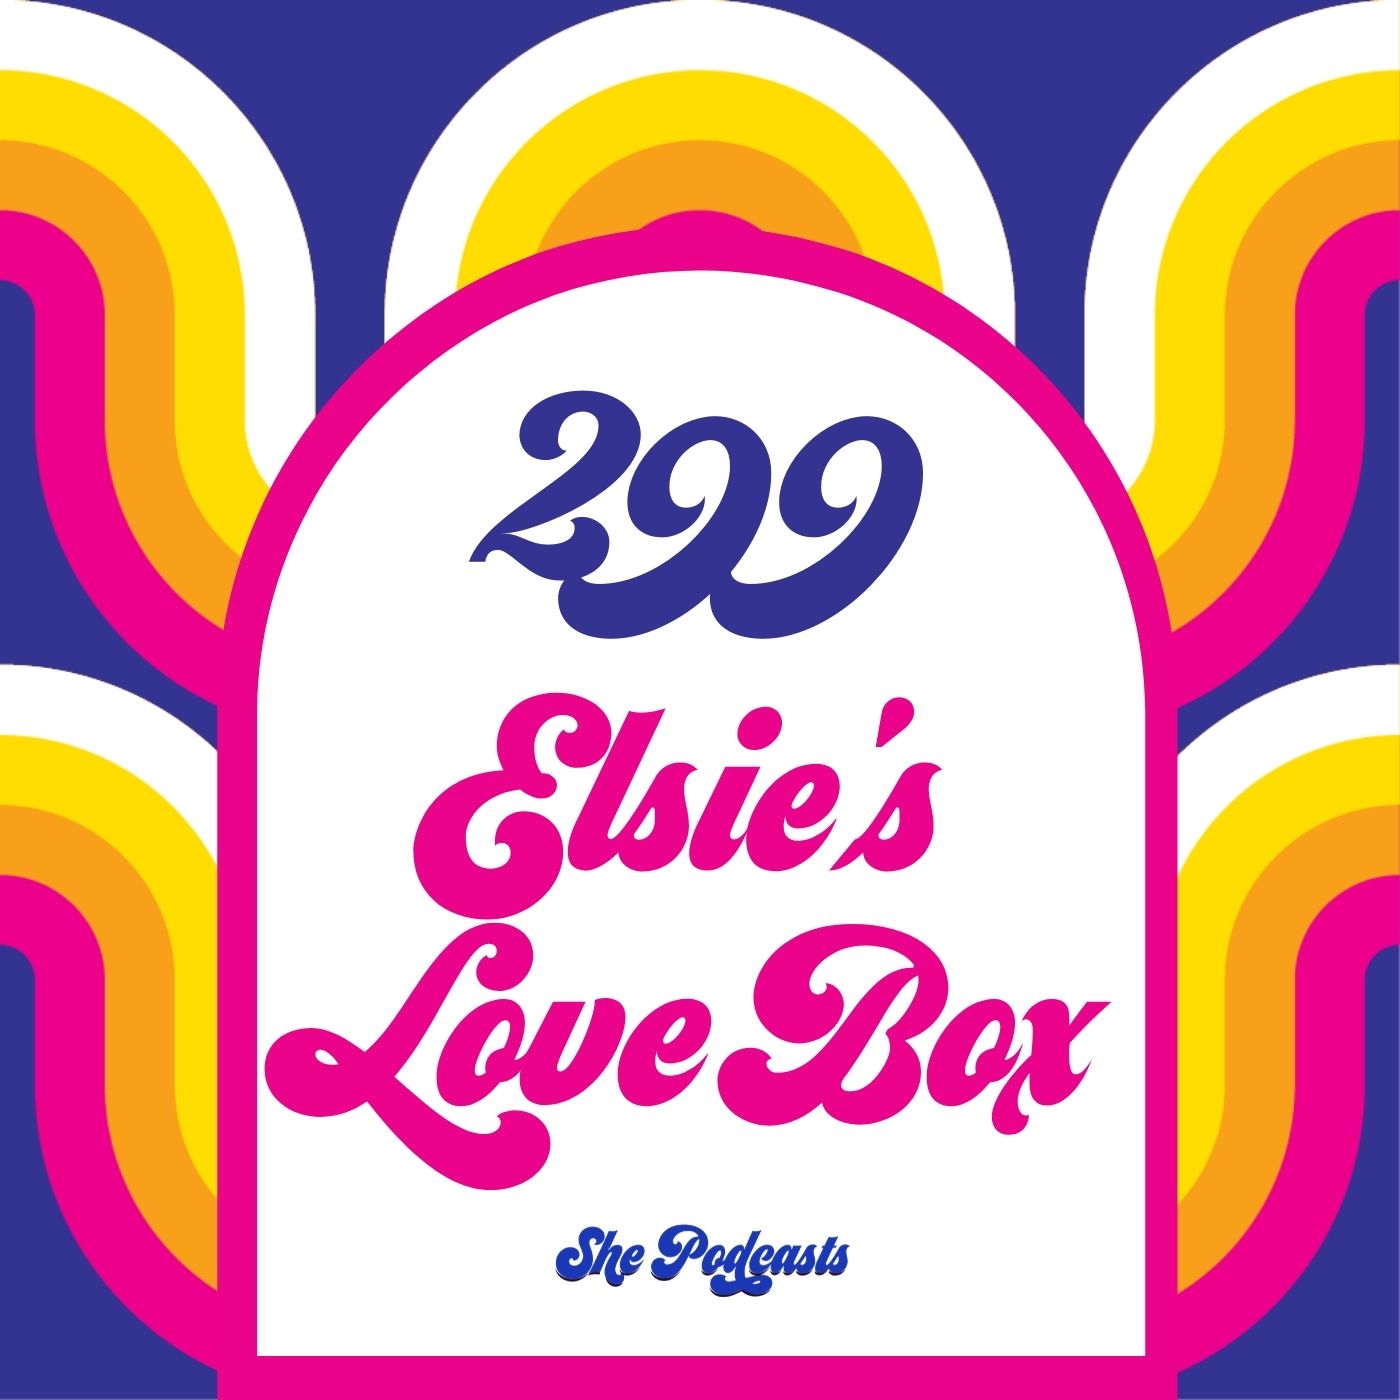 299 Elsies Love Box